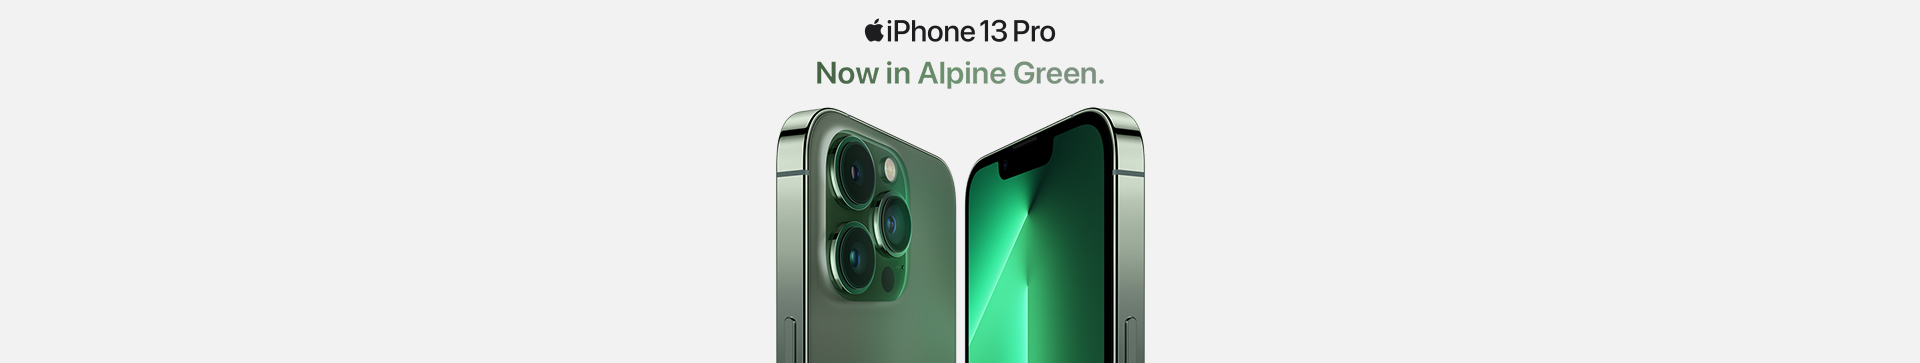 iphone-13-pro-pre-order-en-ar-1920x363